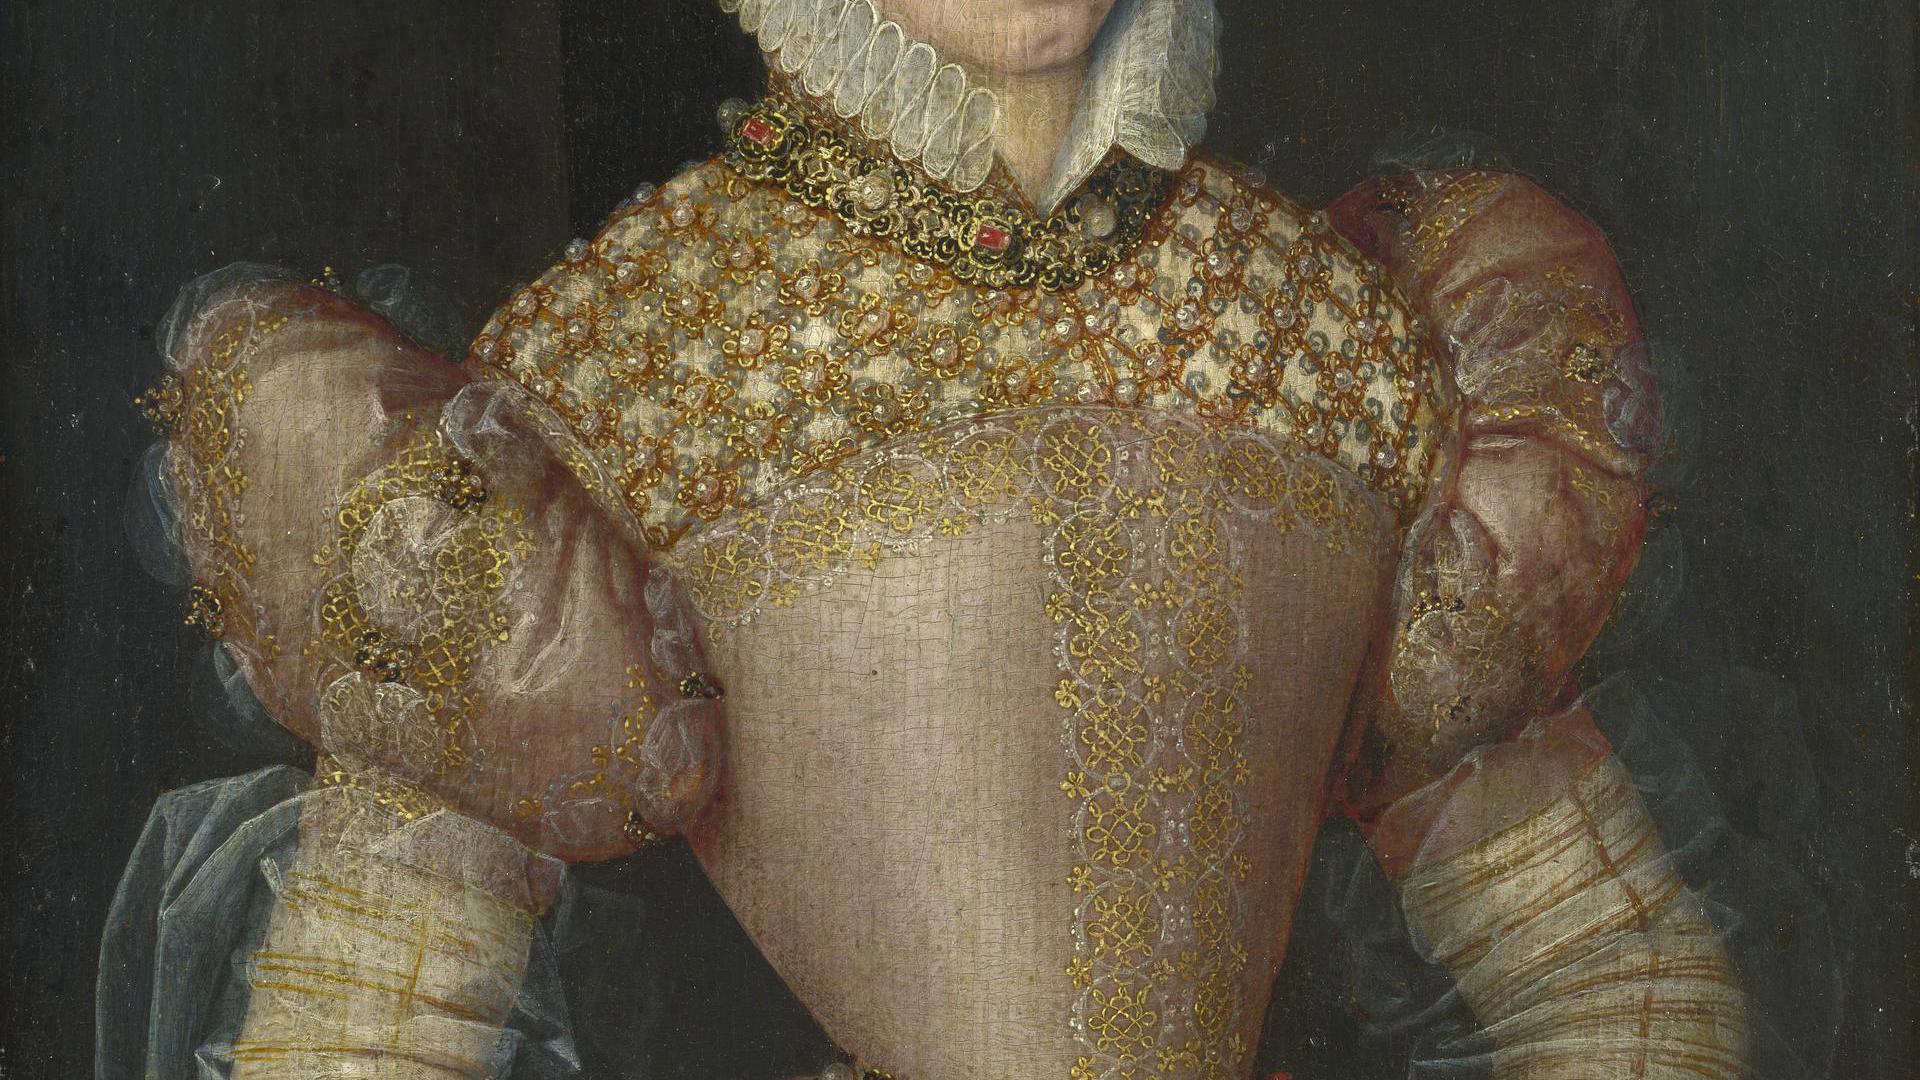 Portrait of a Lady by François Quesnel